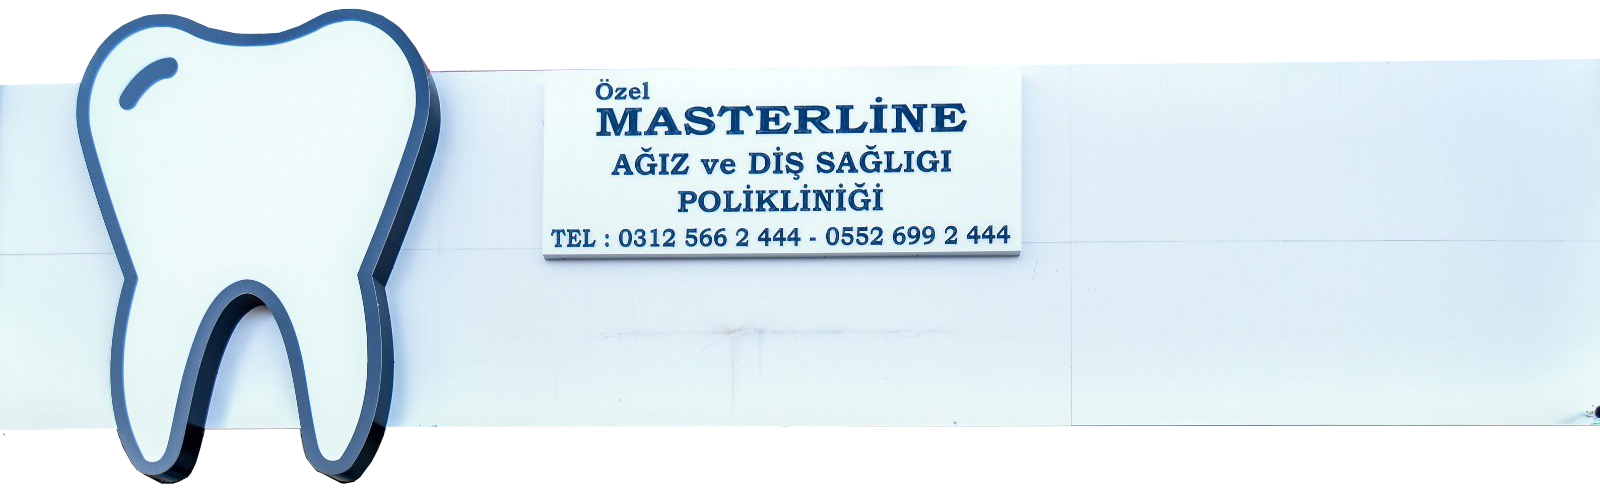 Masterline Clinic